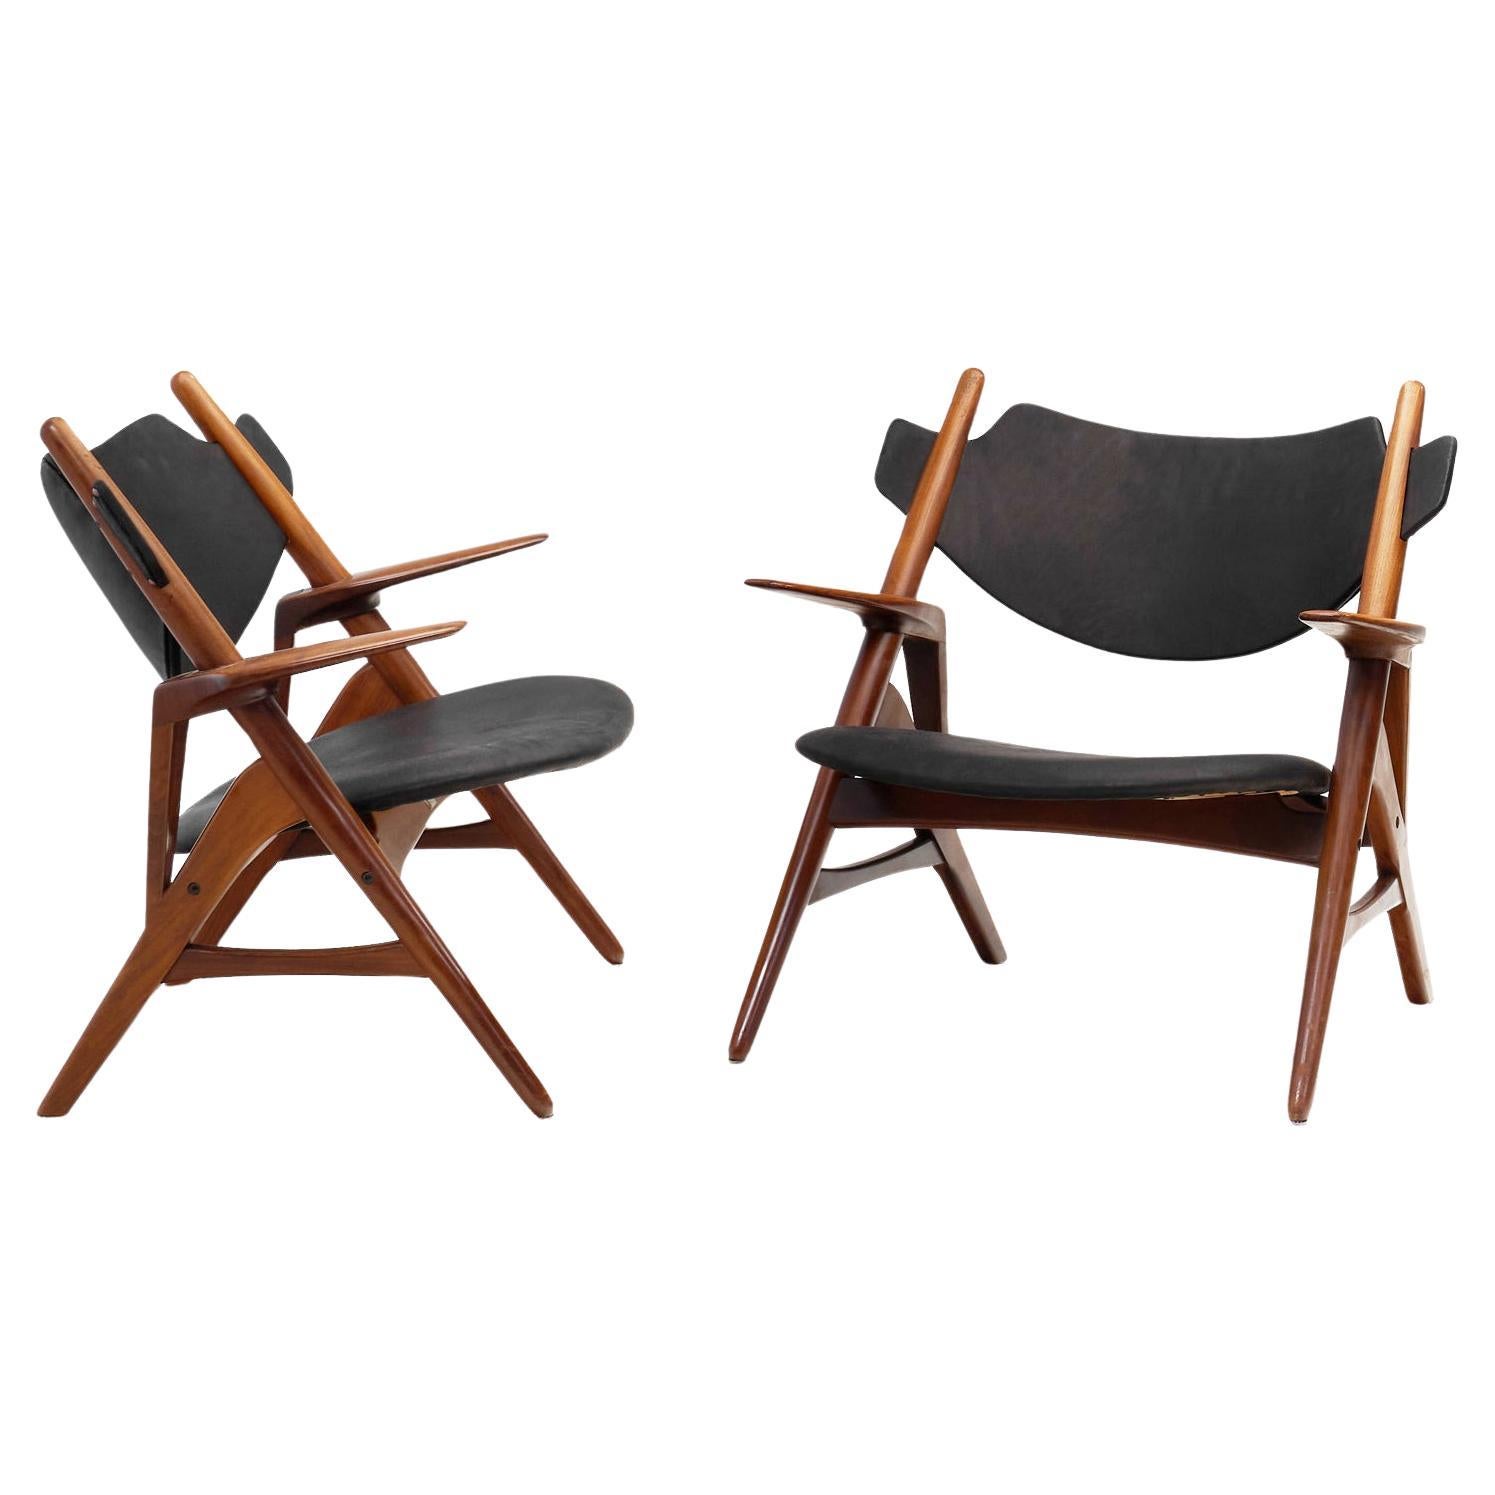 Set of 2 Sculptural Danish Mid-Century Modern Chairs, Denmark ca 1960s